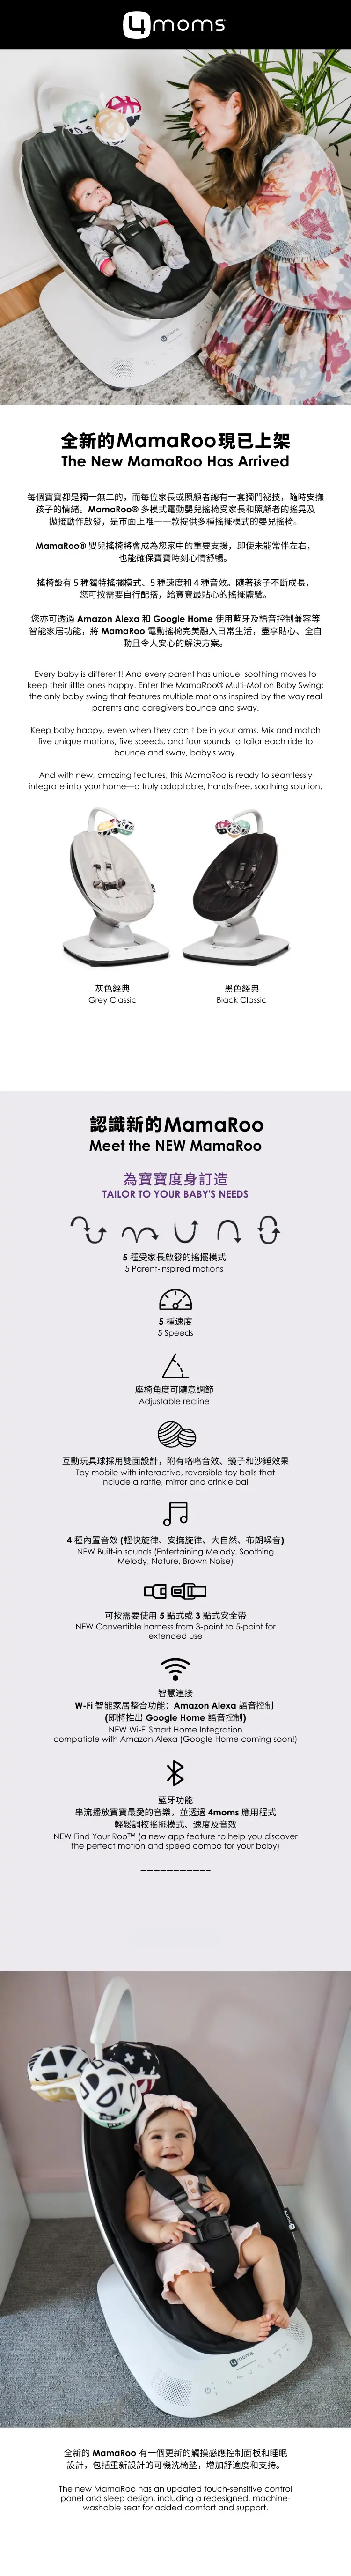 4moms mamaRoo®5 电动婴儿摇椅